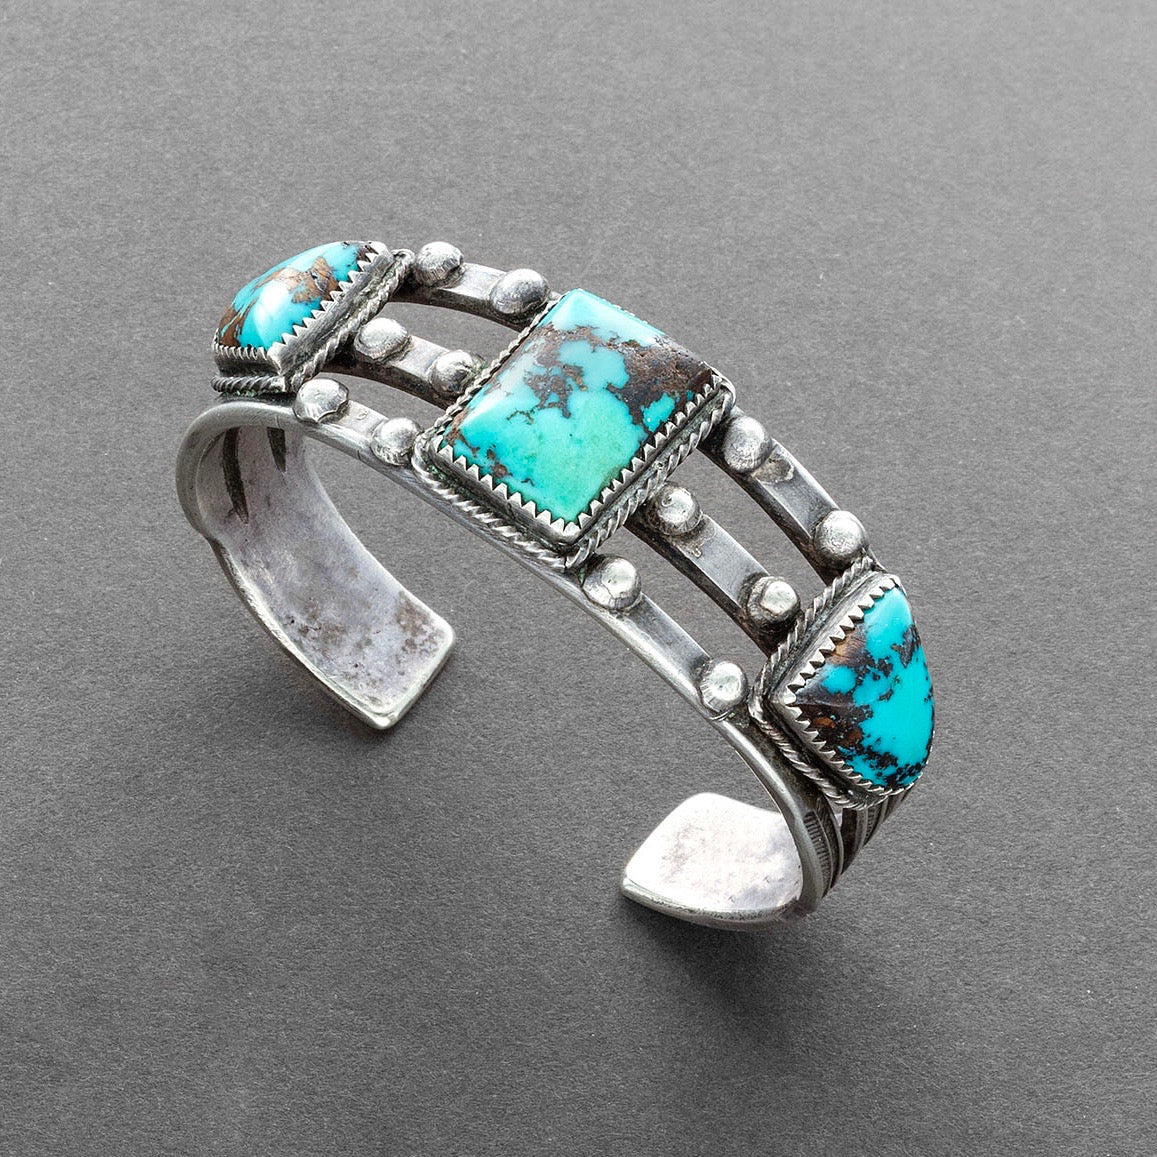 Historic Navajo Bracelet Set With Three Natural Turquoise Stones - Turquoise & Tufa